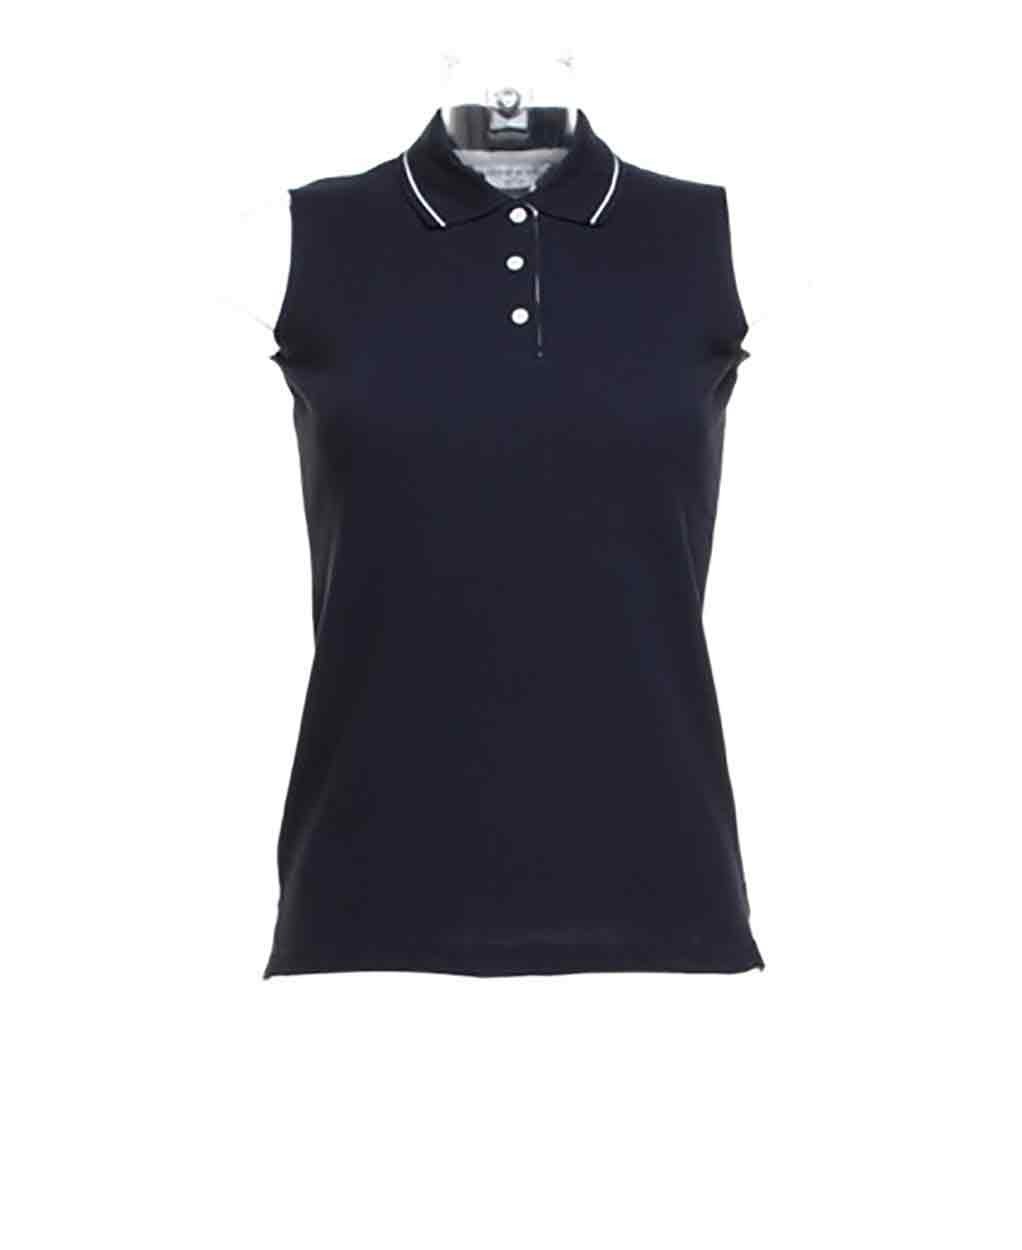 Gamegear Ladies Proactive Sleeveless Pique Polo Shirt - Women's Sleeveless  T Shirts - Women's T Shirts - T Shirts - Leisurewear - Best Workwear